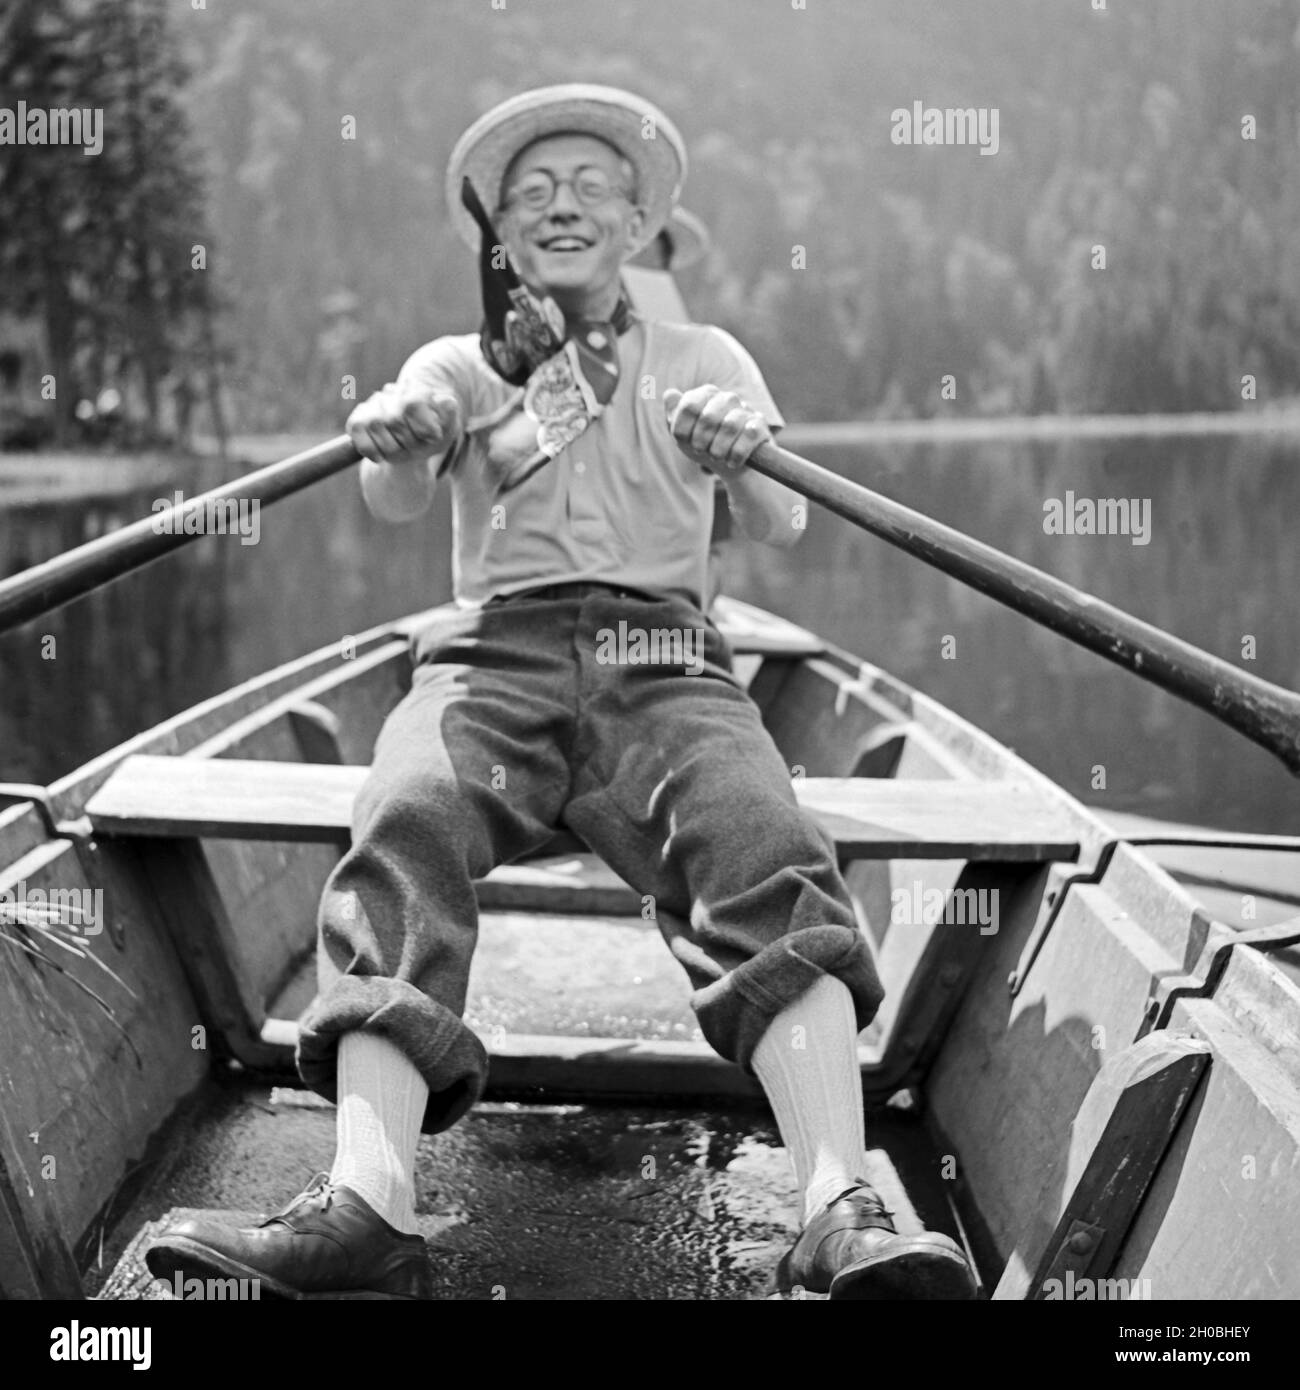 Ein Mann beim Rudern, Deutschland 1930er Jahre.Un homme dans un bateau à rames, Allemagne des années 1930. Banque D'Images